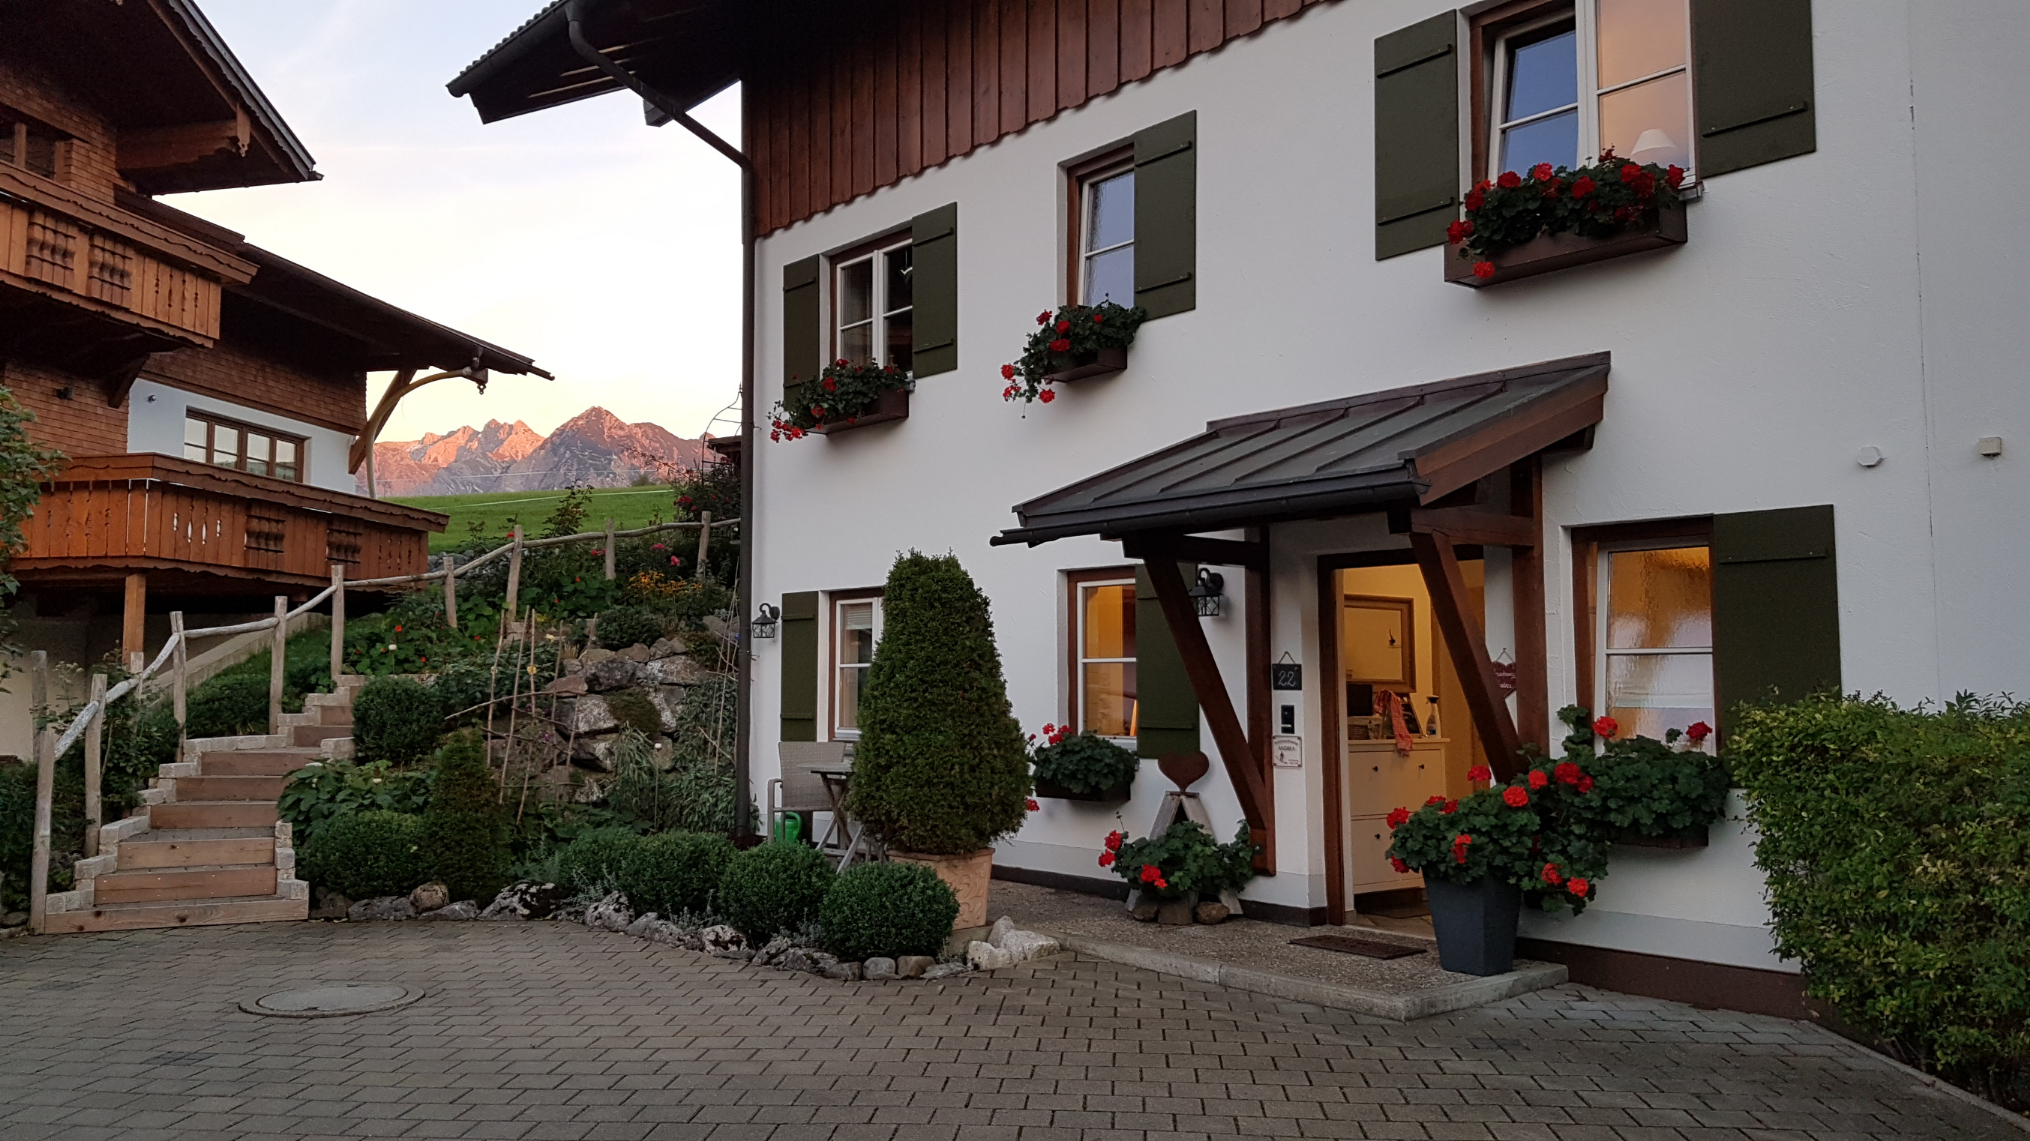 Ferienwohnung Andrea in Obermaiselstein